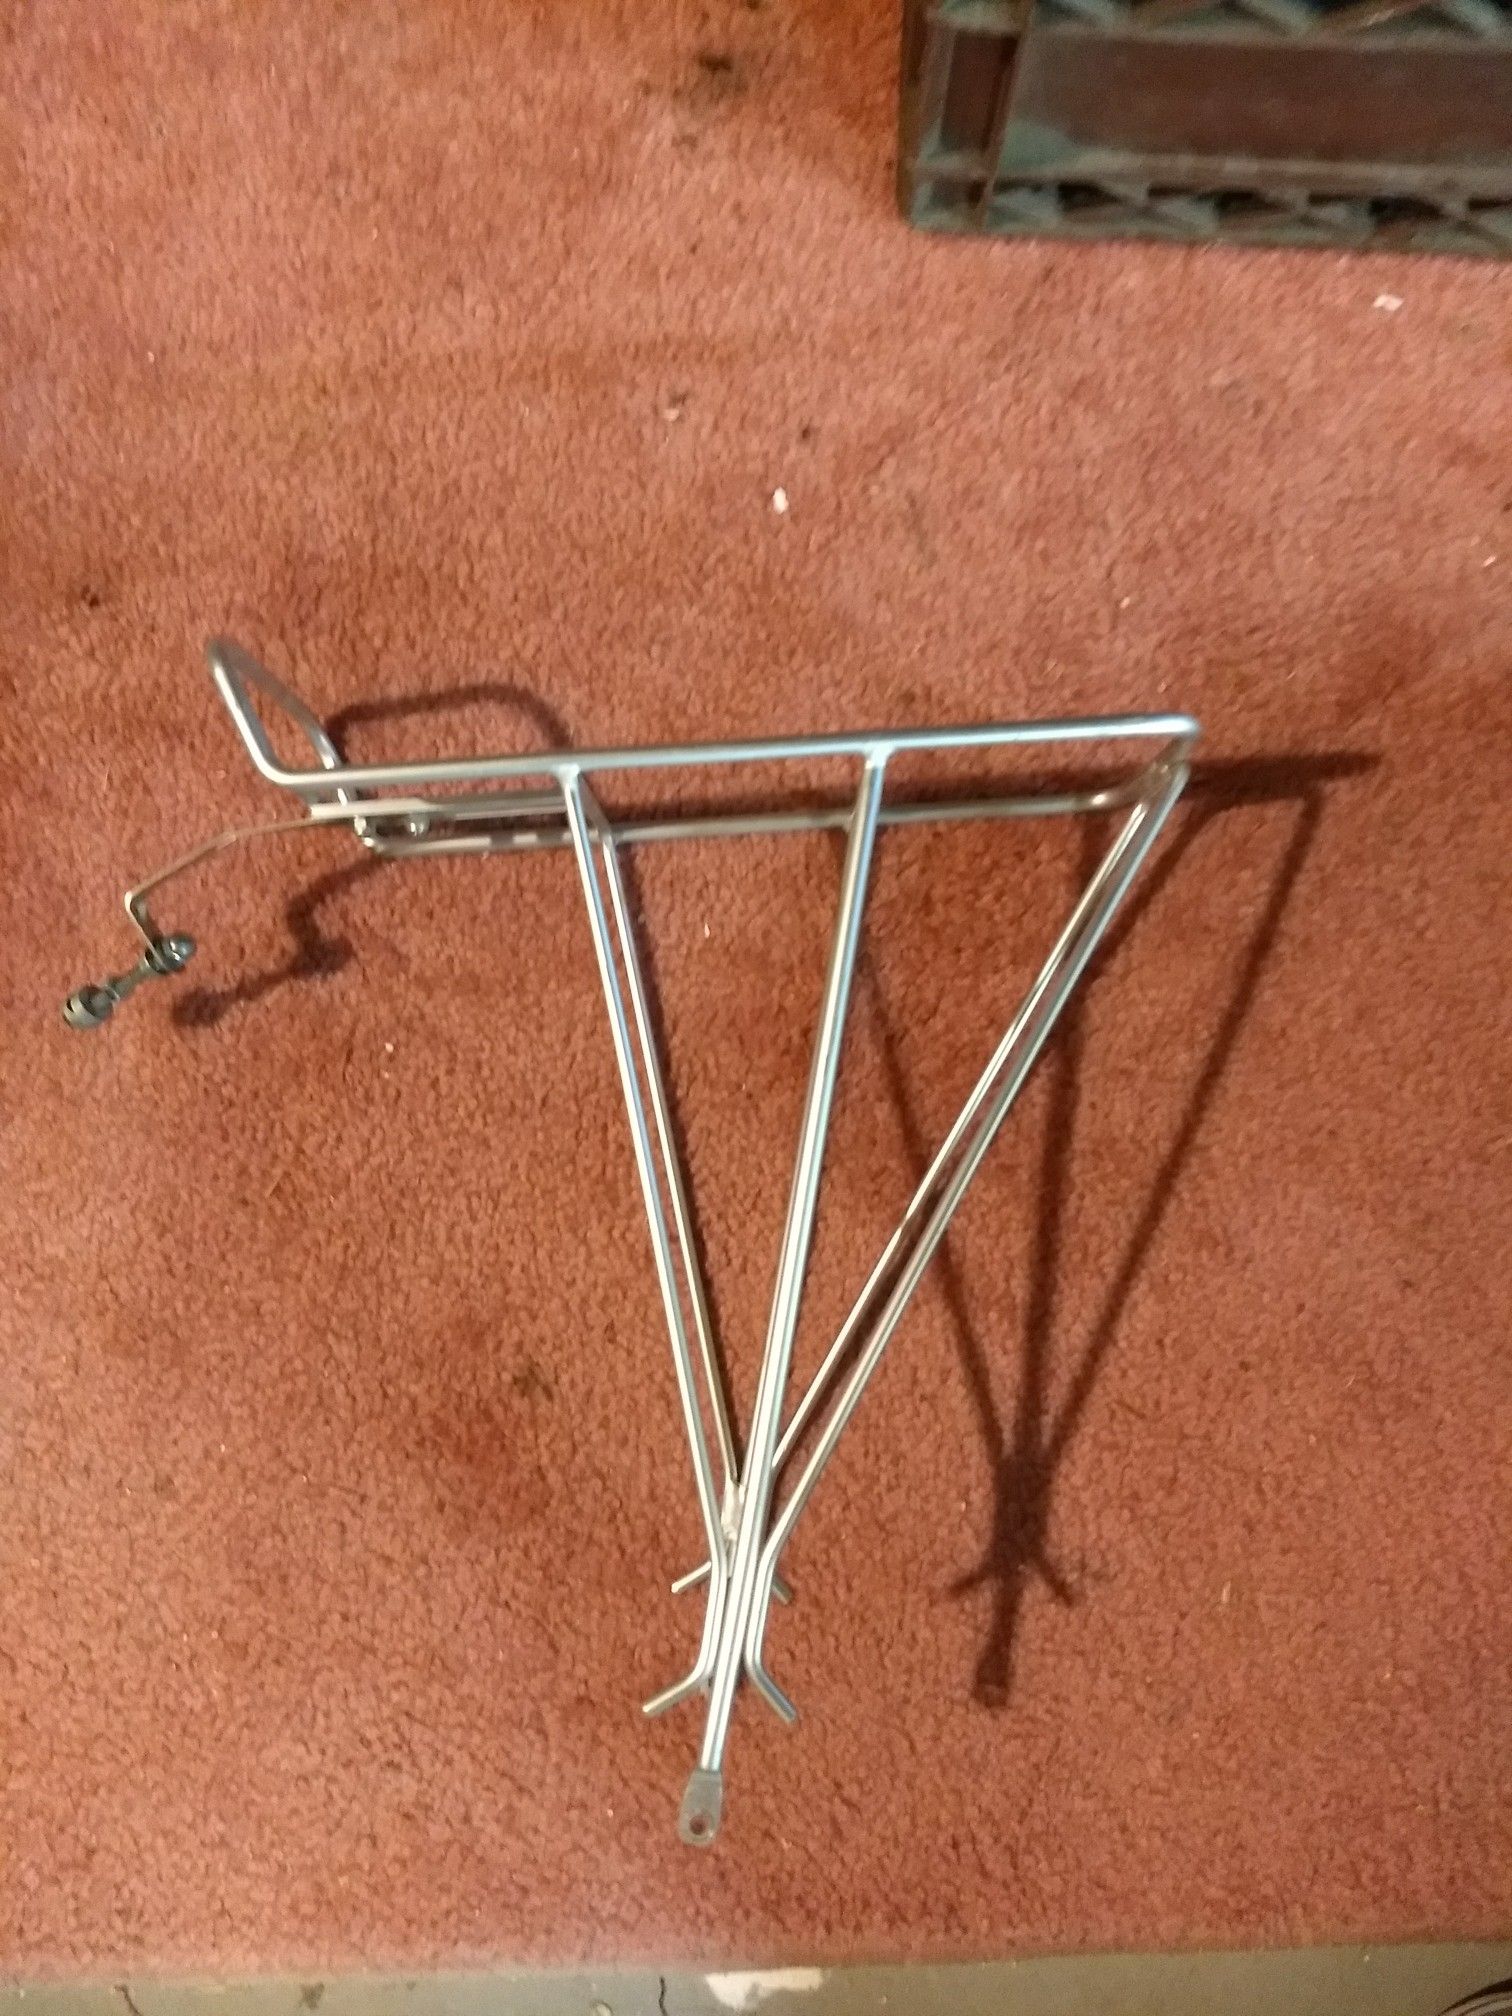 Aluminum bike rack